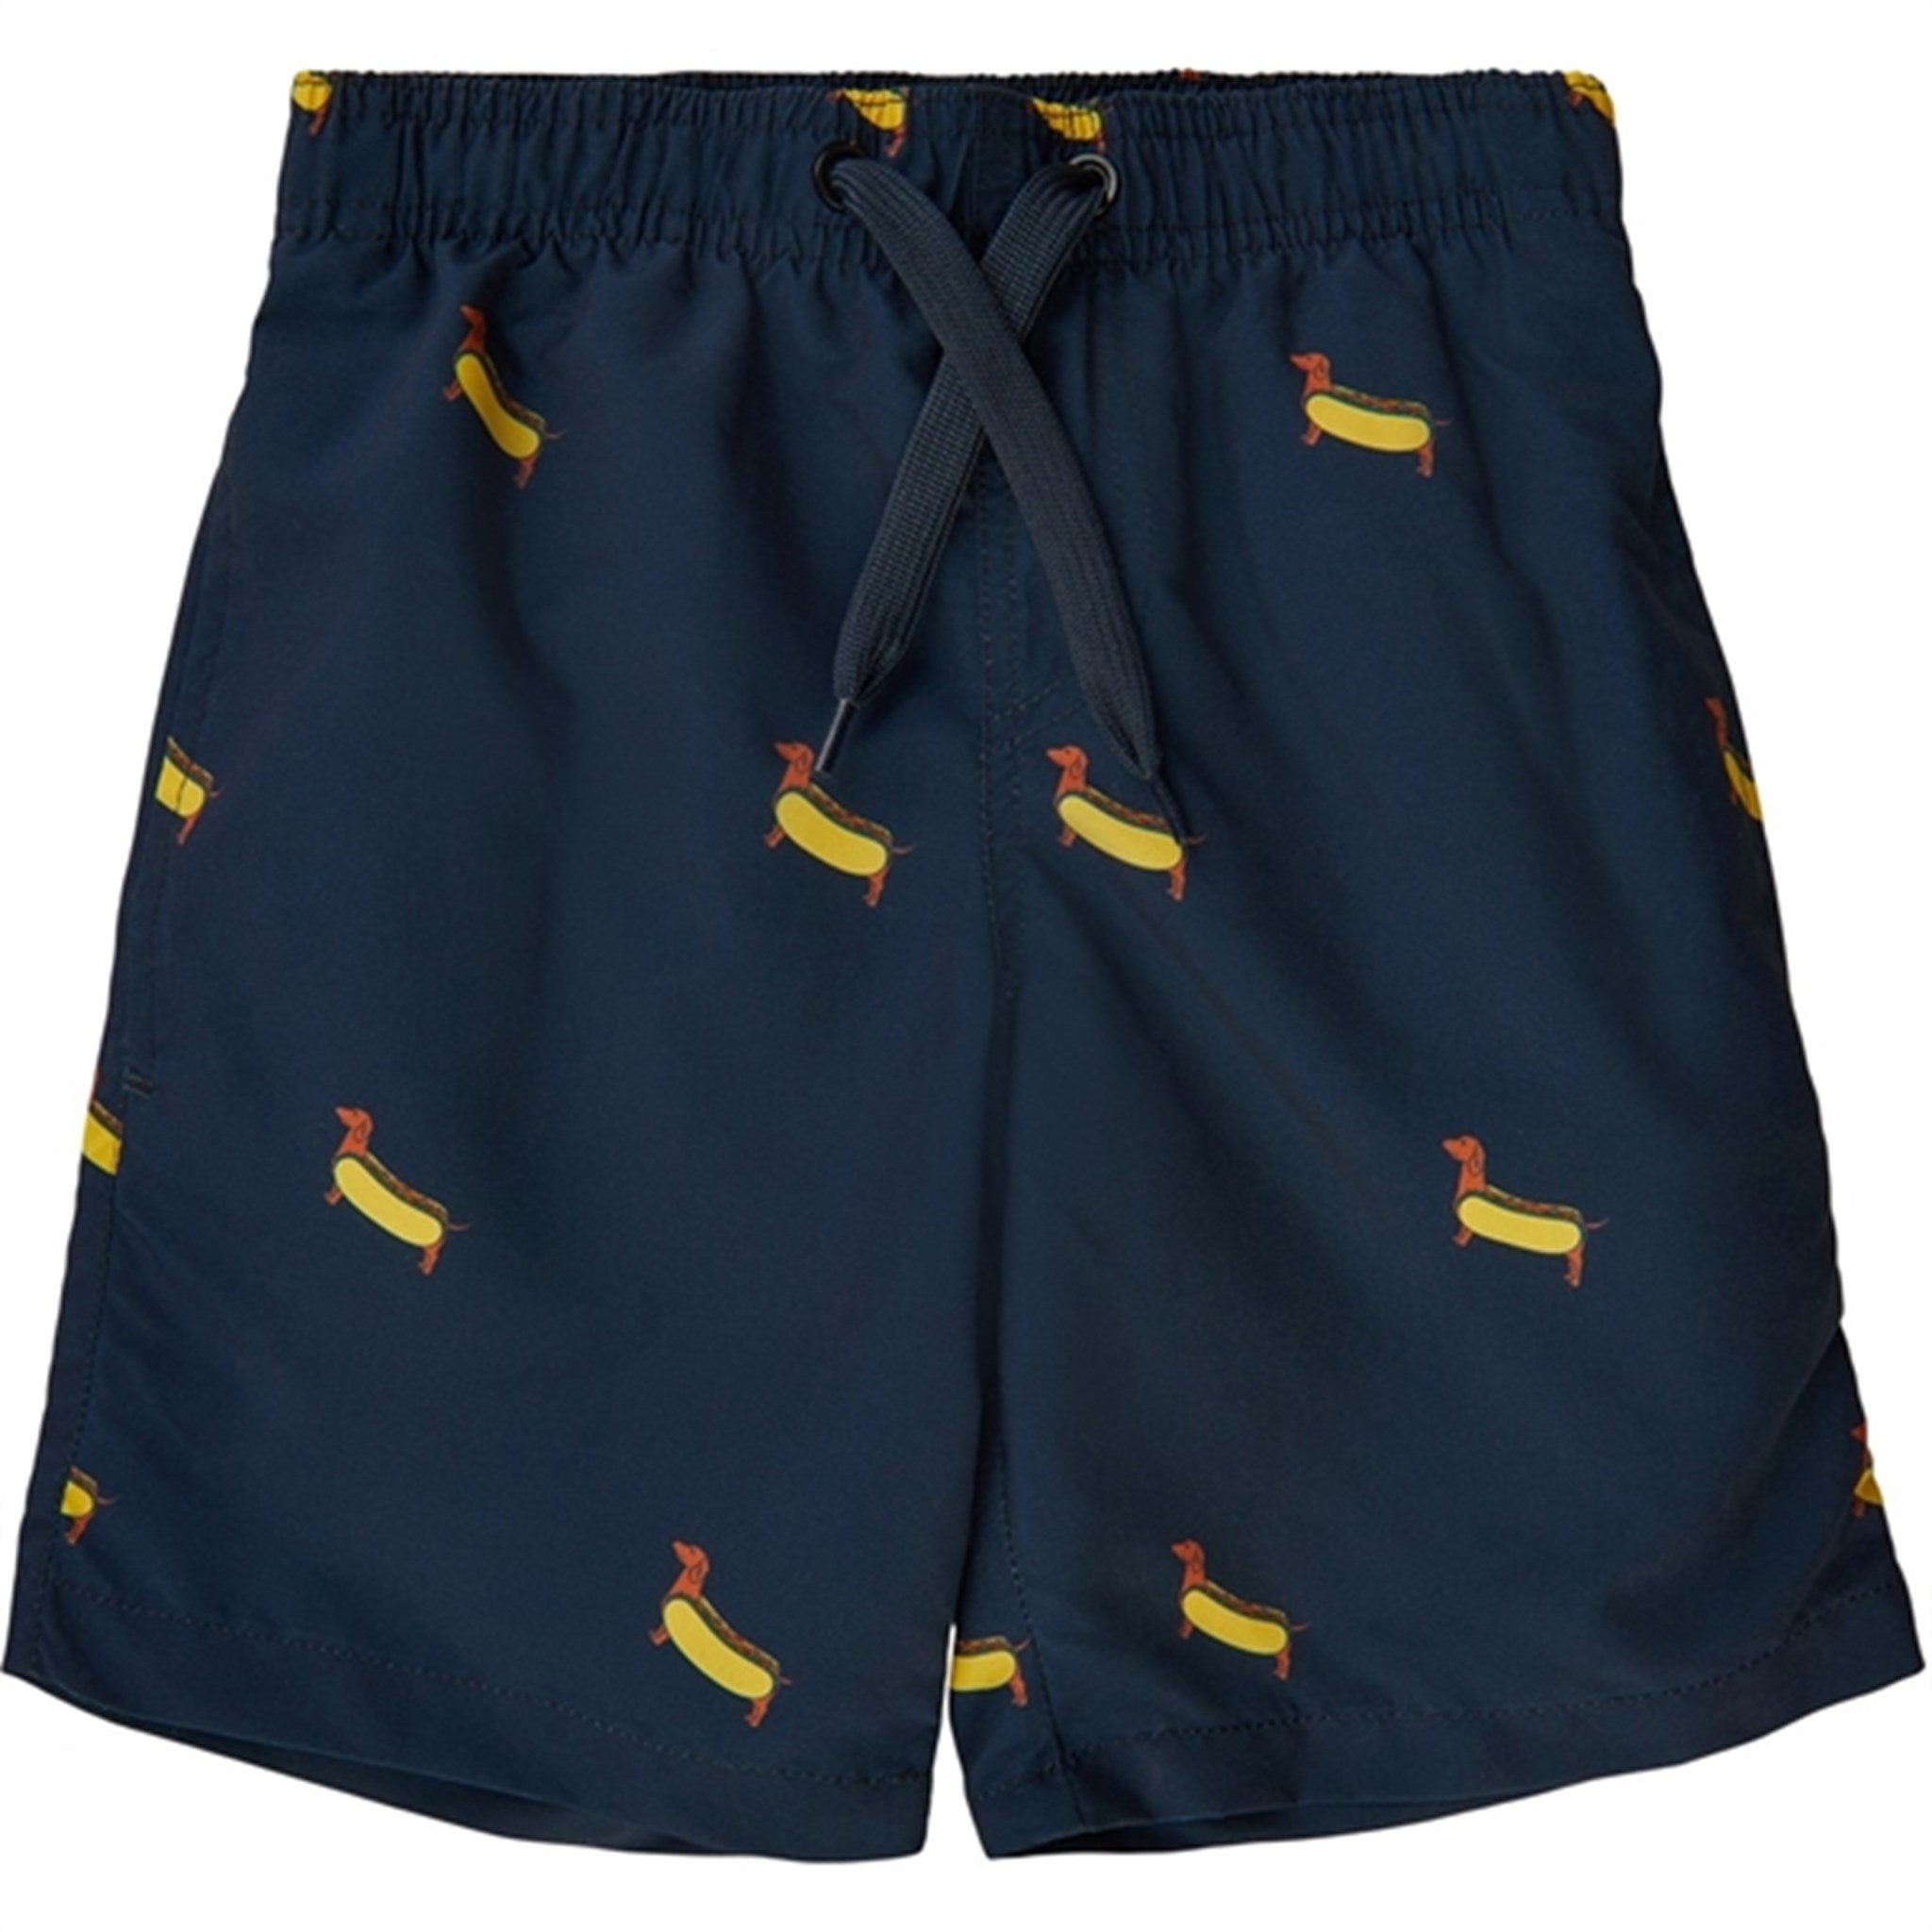 THE NEW Navy Blazer Fuller Swim Shorts